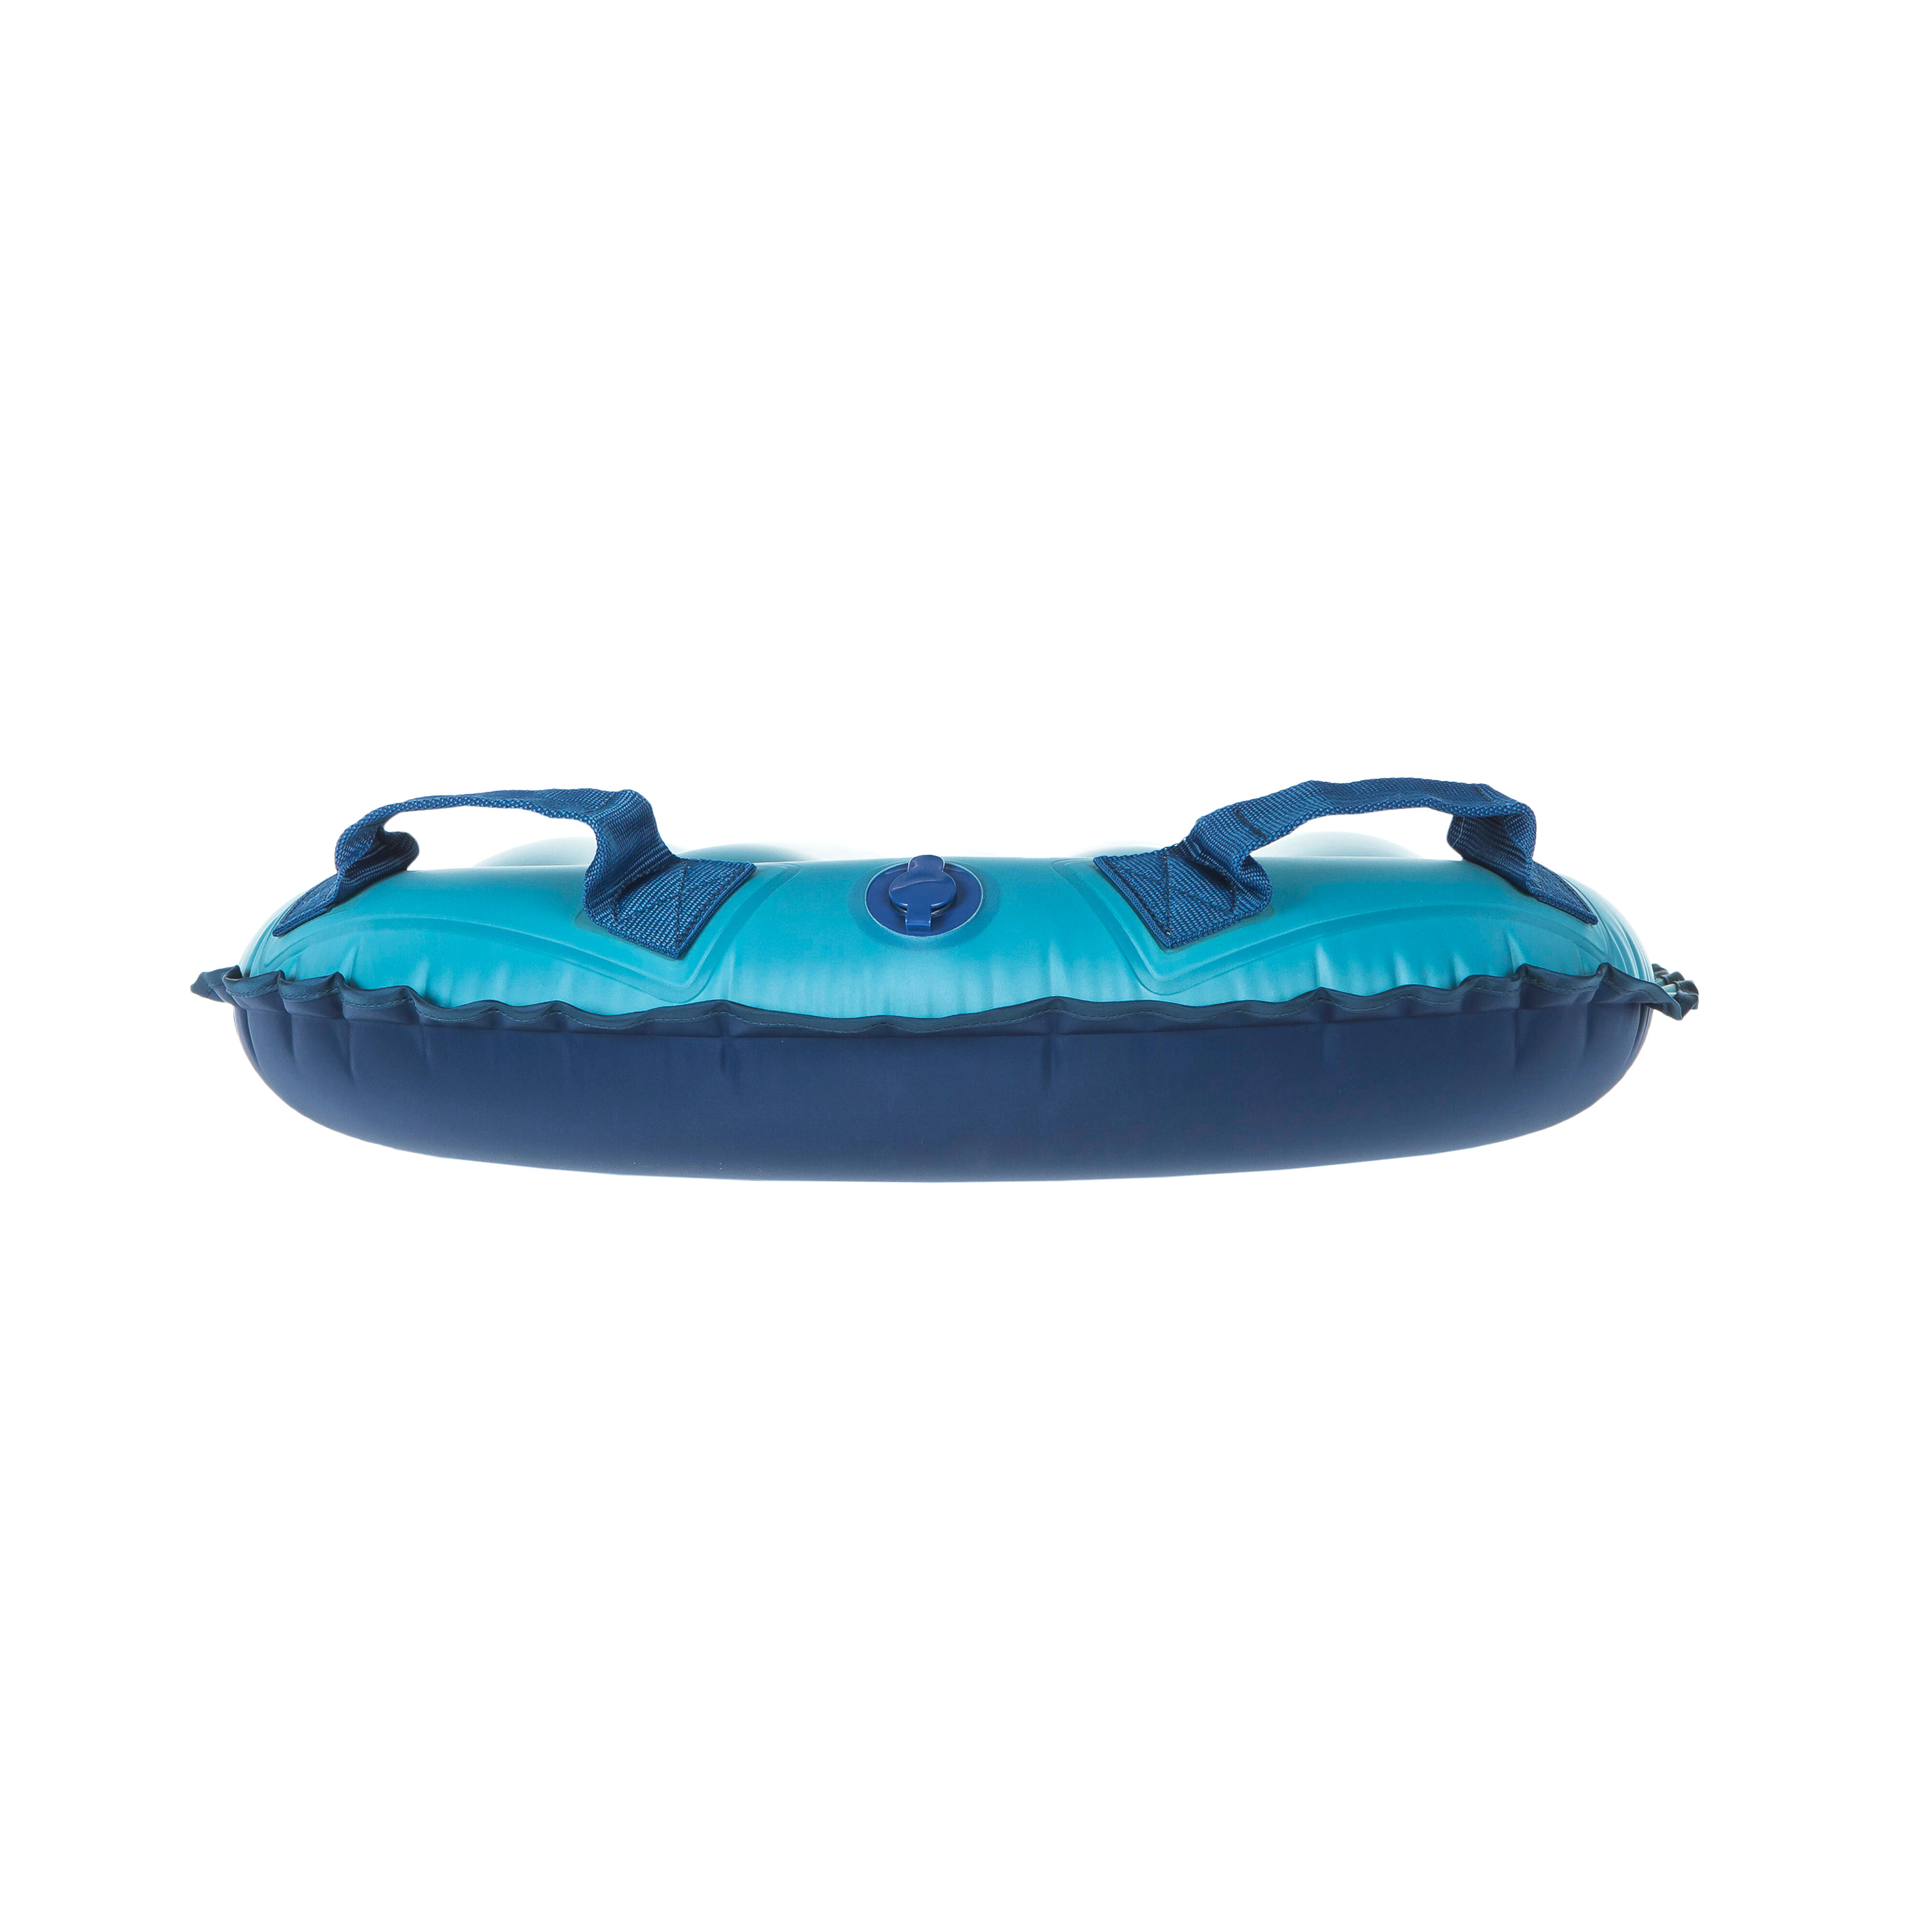 Beginner Inflatable Bodyboard - Compact - OLAIAN